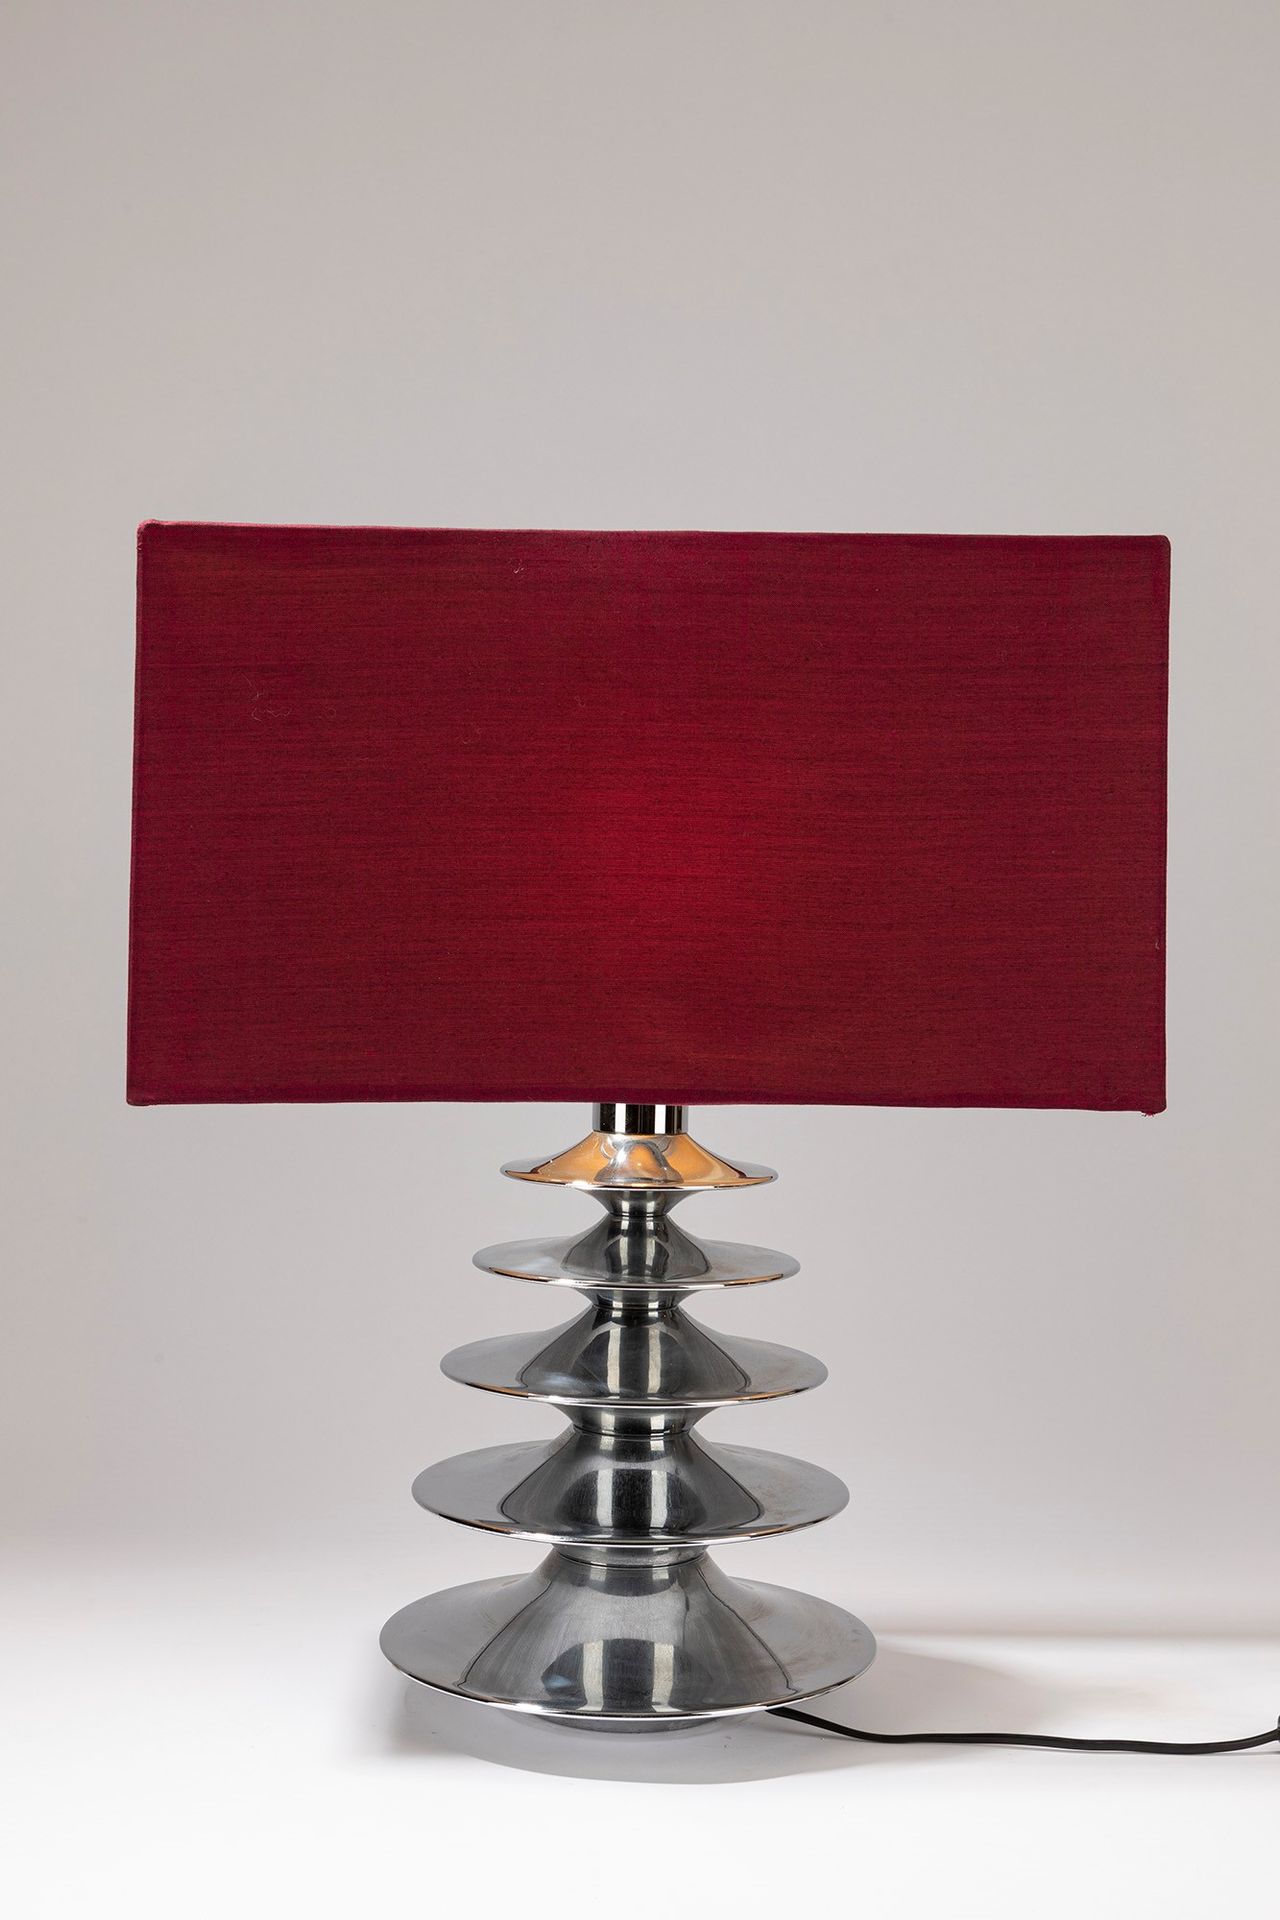 ITALIAN MANUFACTURE Lámpara de mesa, época de los 70

cm 50 x 17 x 60 H
acero cr&hellip;